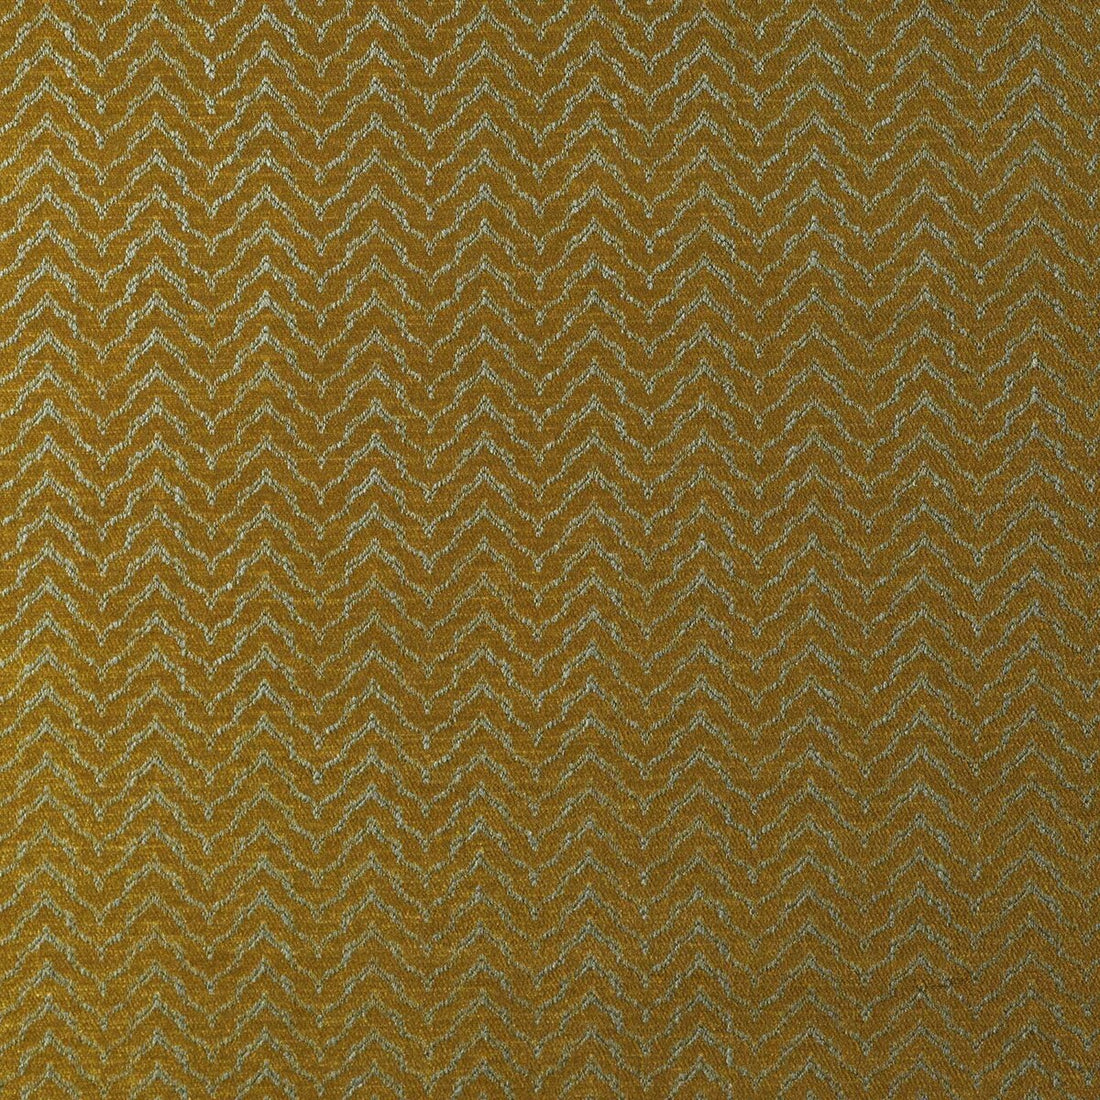 Sella fabric in oro color - pattern GDT5180.005.0 - by Gaston y Daniela in the Lorenzo Castillo II collection